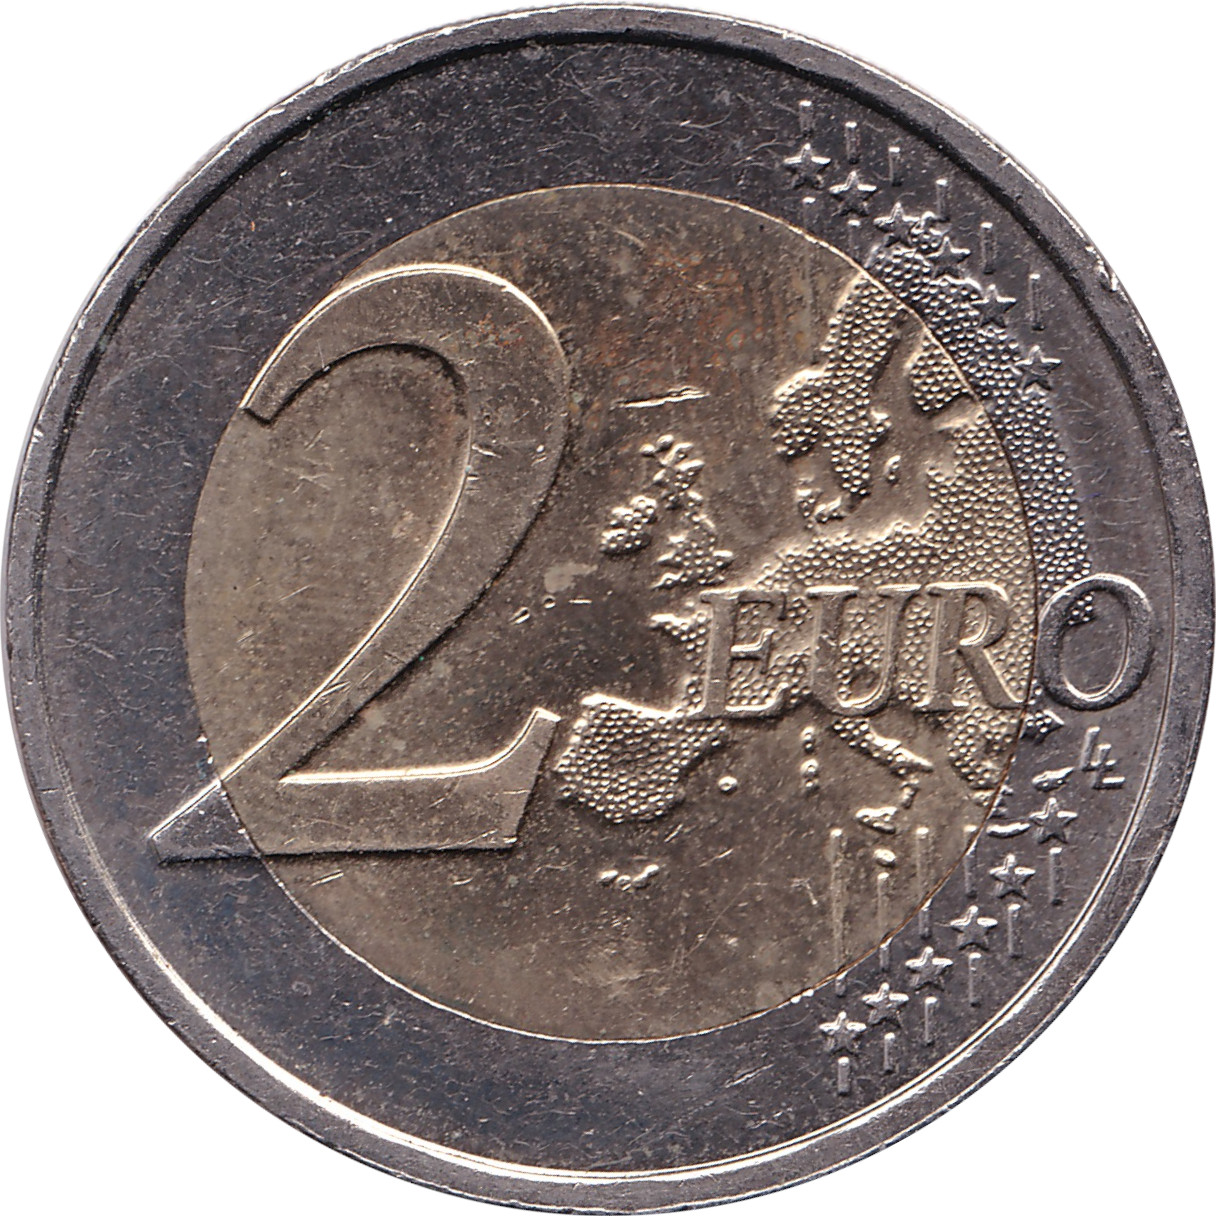 2 euro - Paix en Europe - 70 years